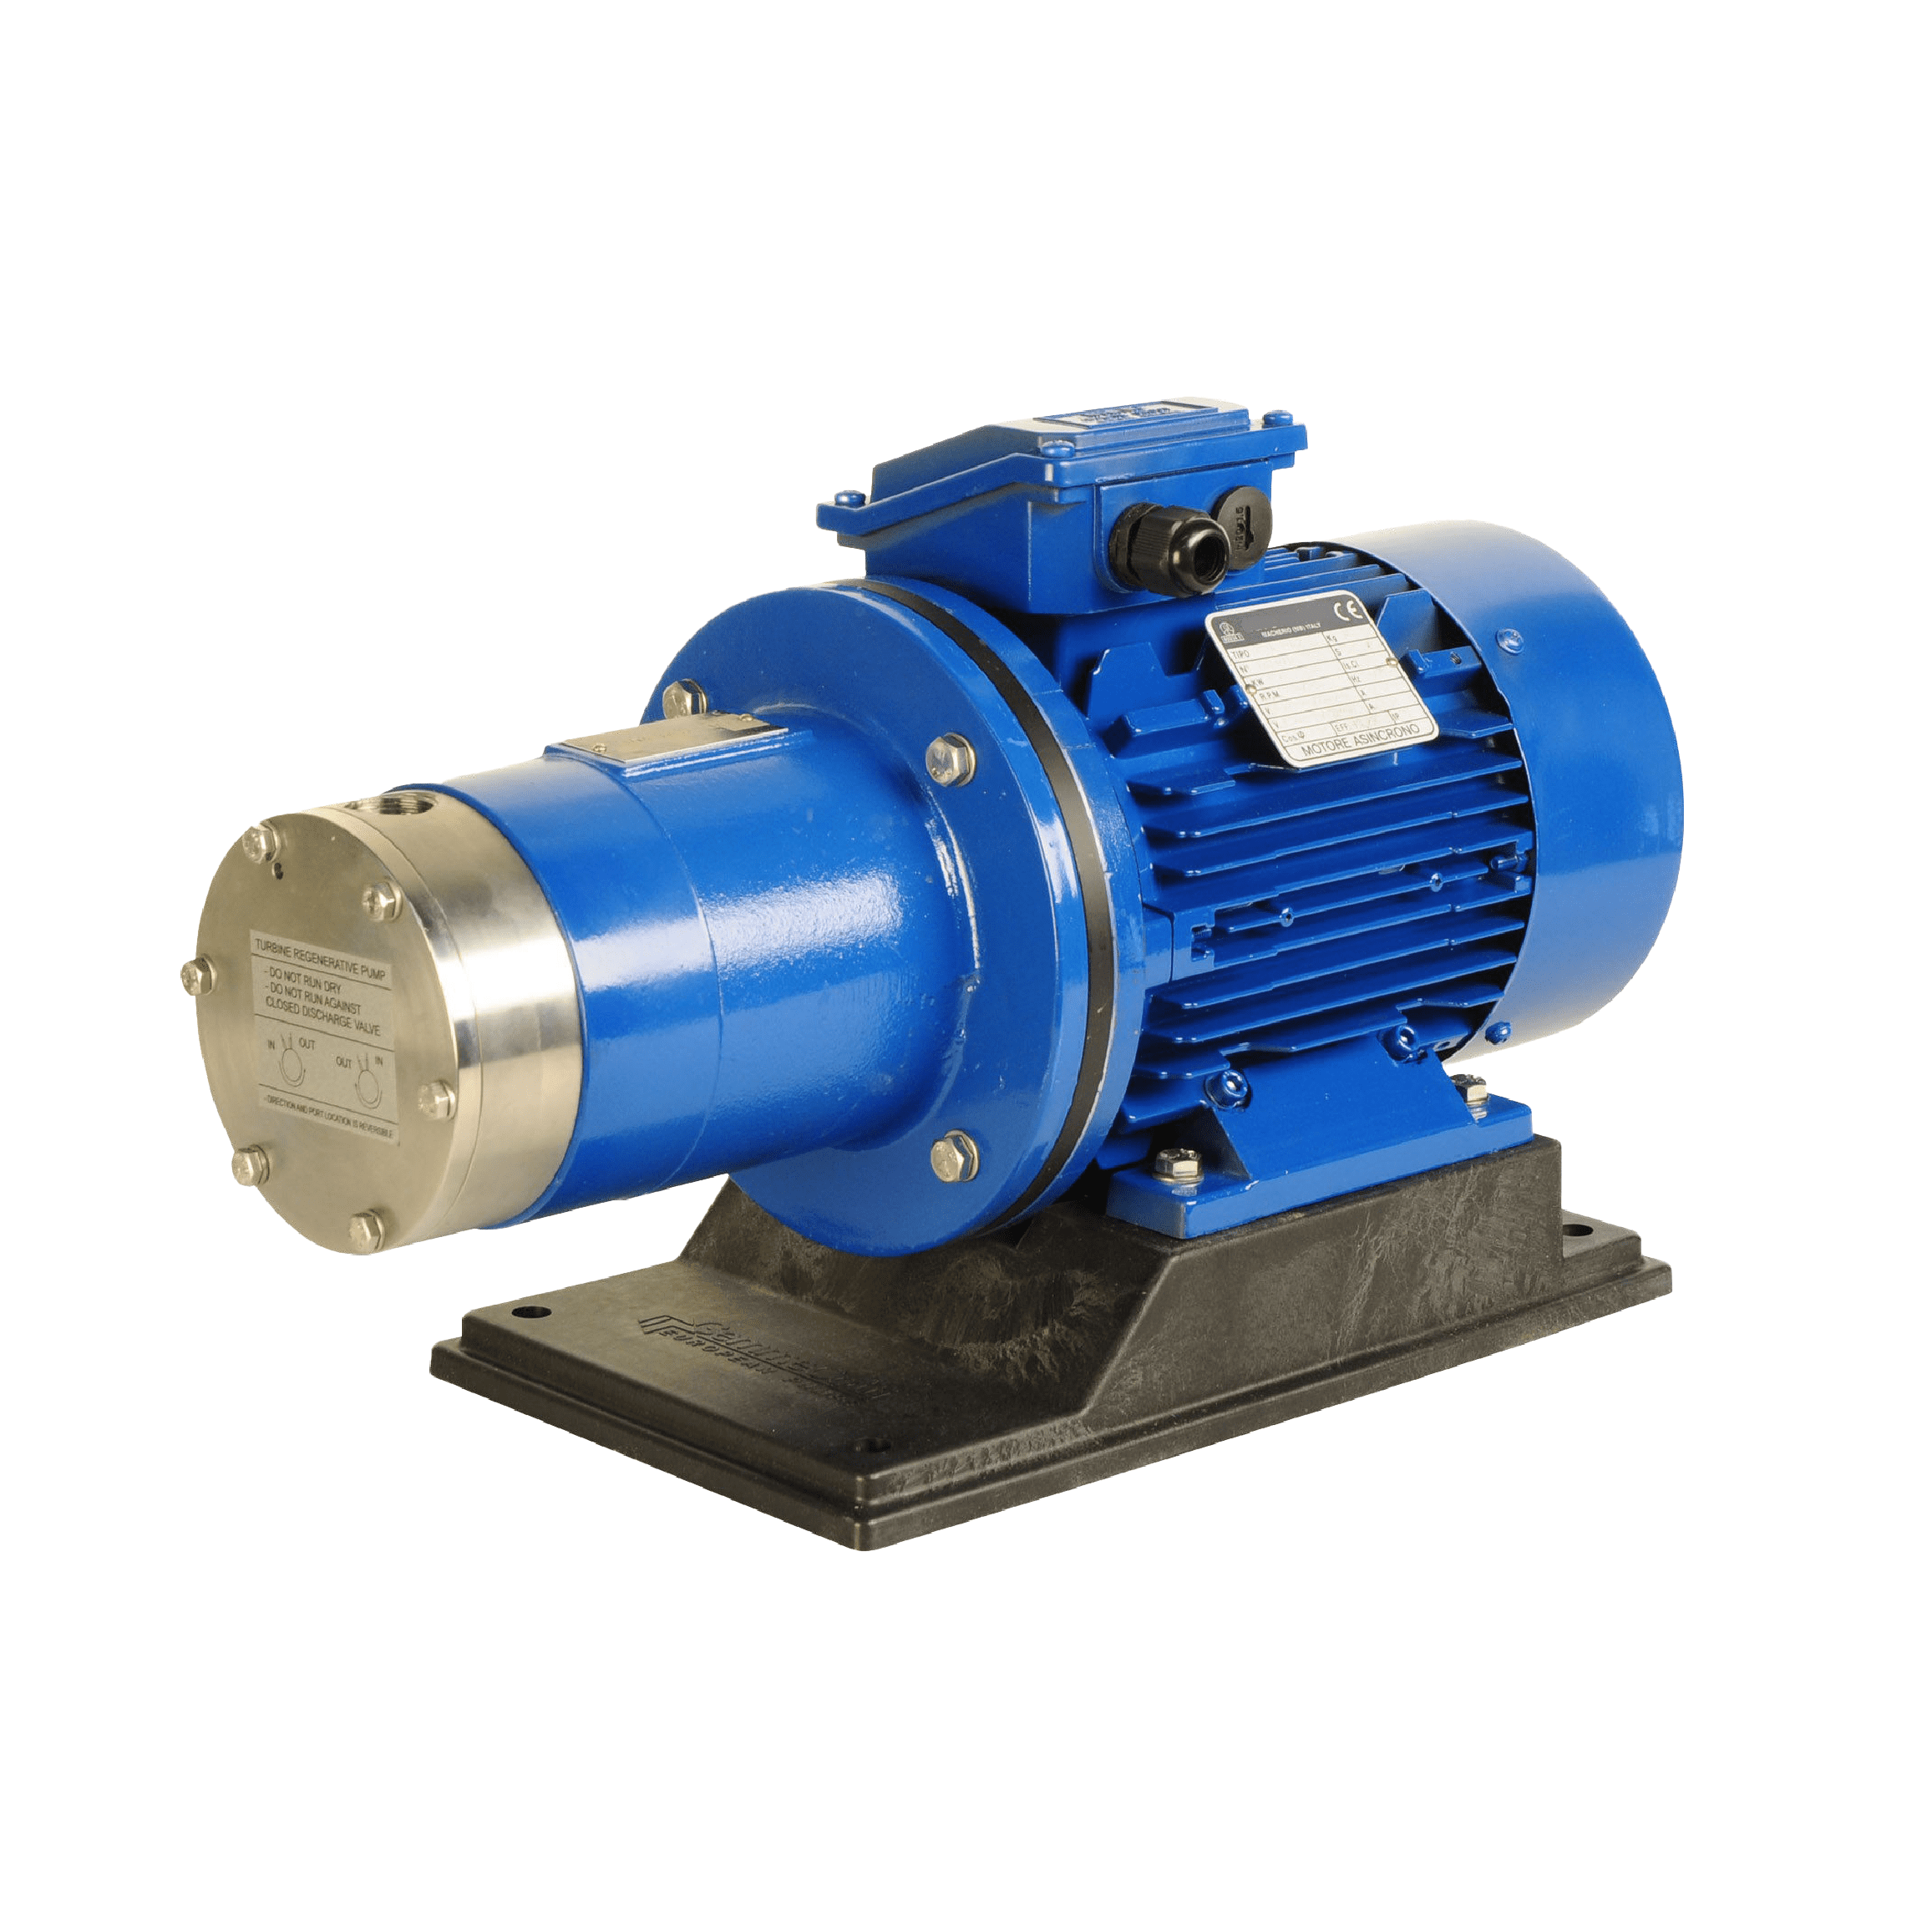 HTA – Magnetic drive turbine pumps in metallic materials